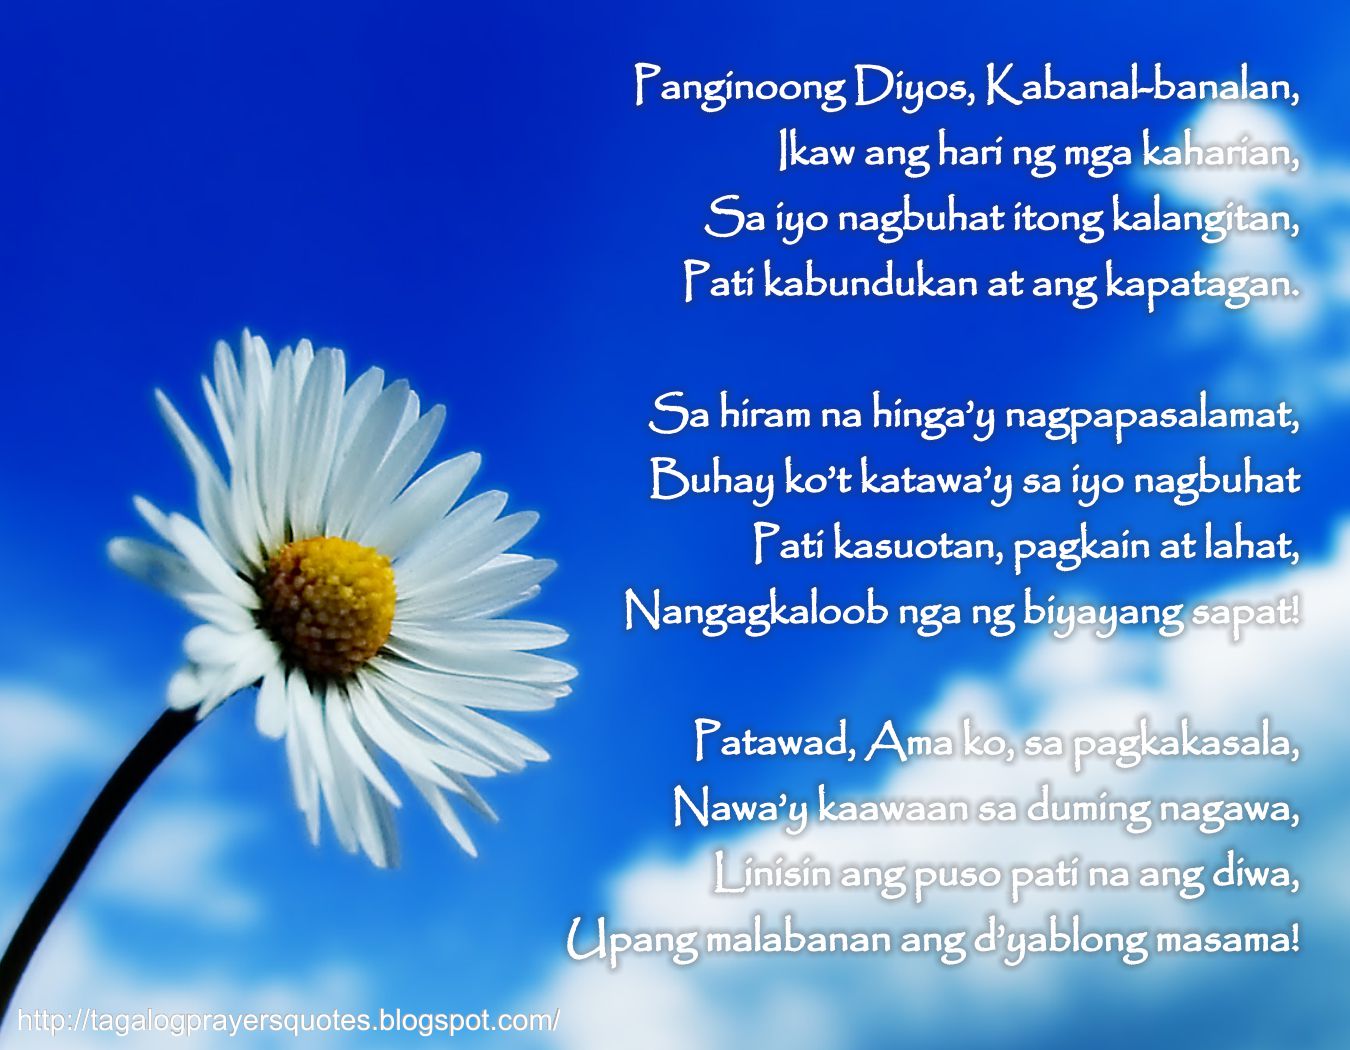 Tagalog Prayers and Christian Quotes: Tagalog Prayer Poem